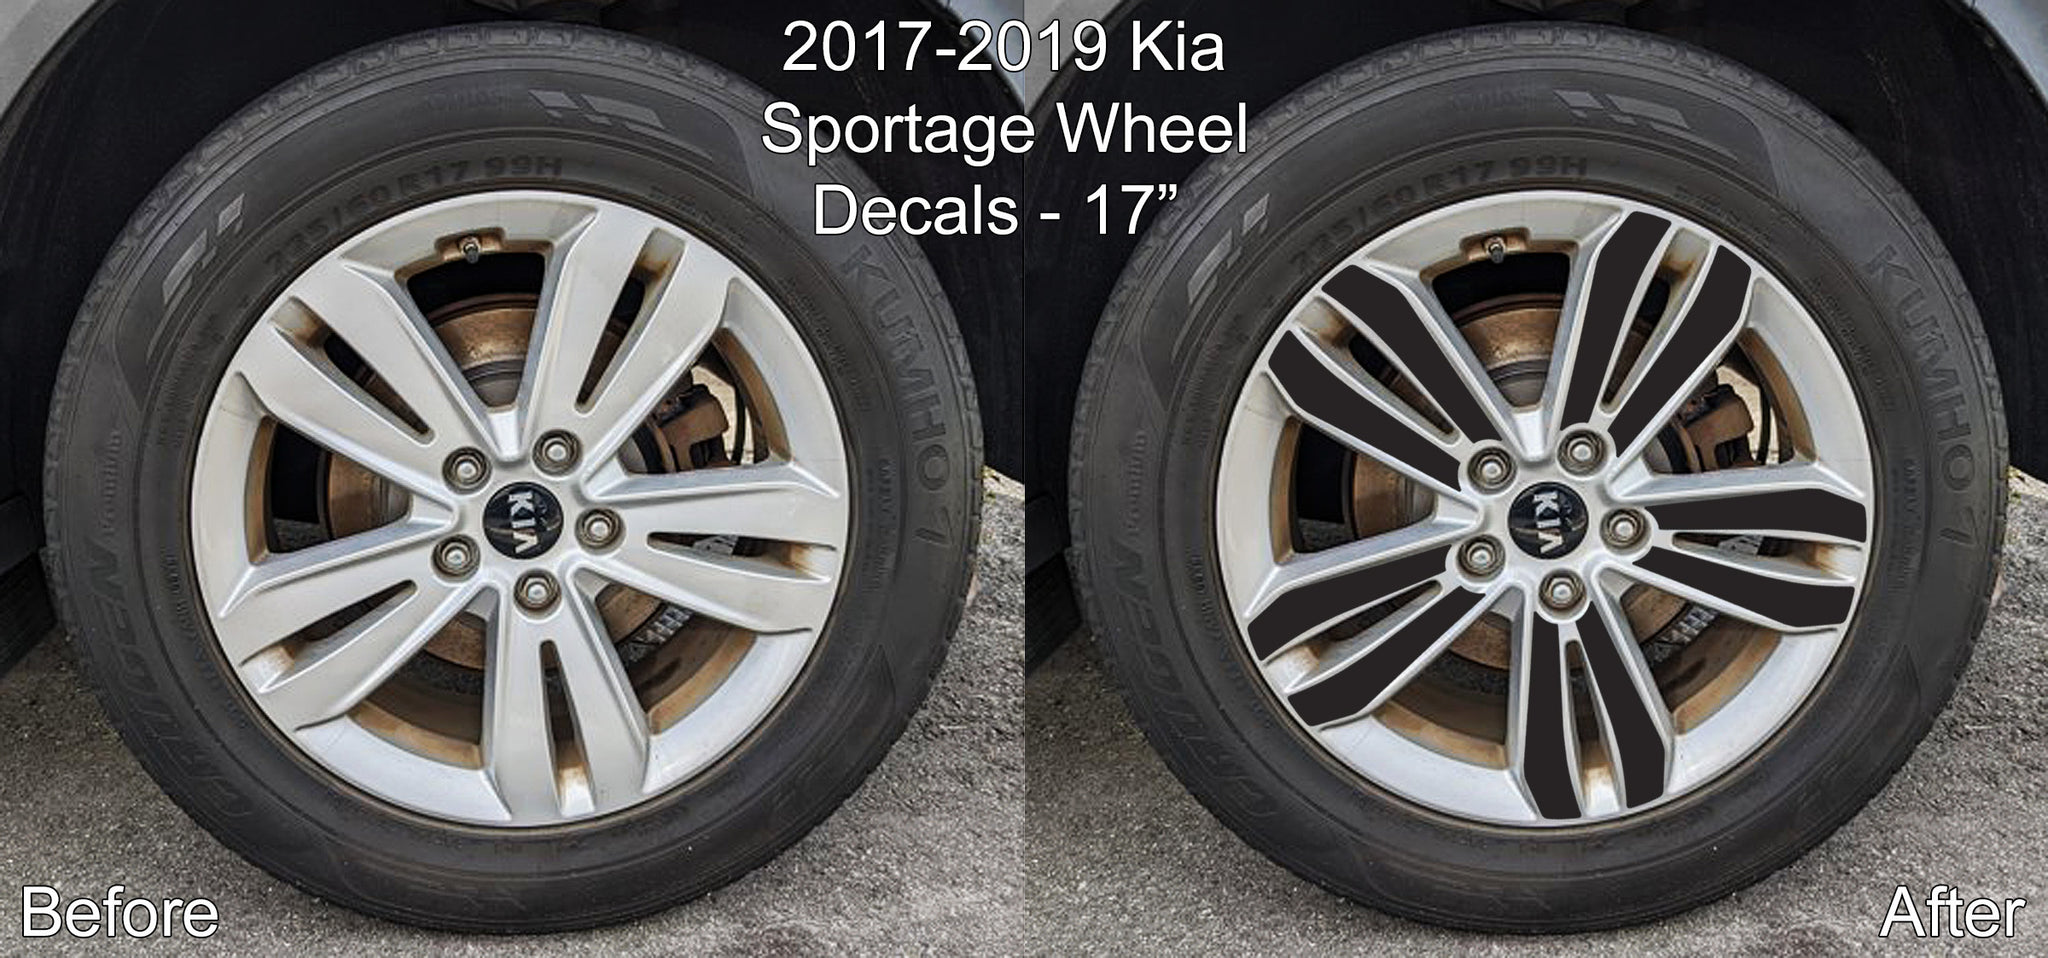 Vinyl Wheel Overlays for Kia Sportage 2017-2019 - 17 Wheels with